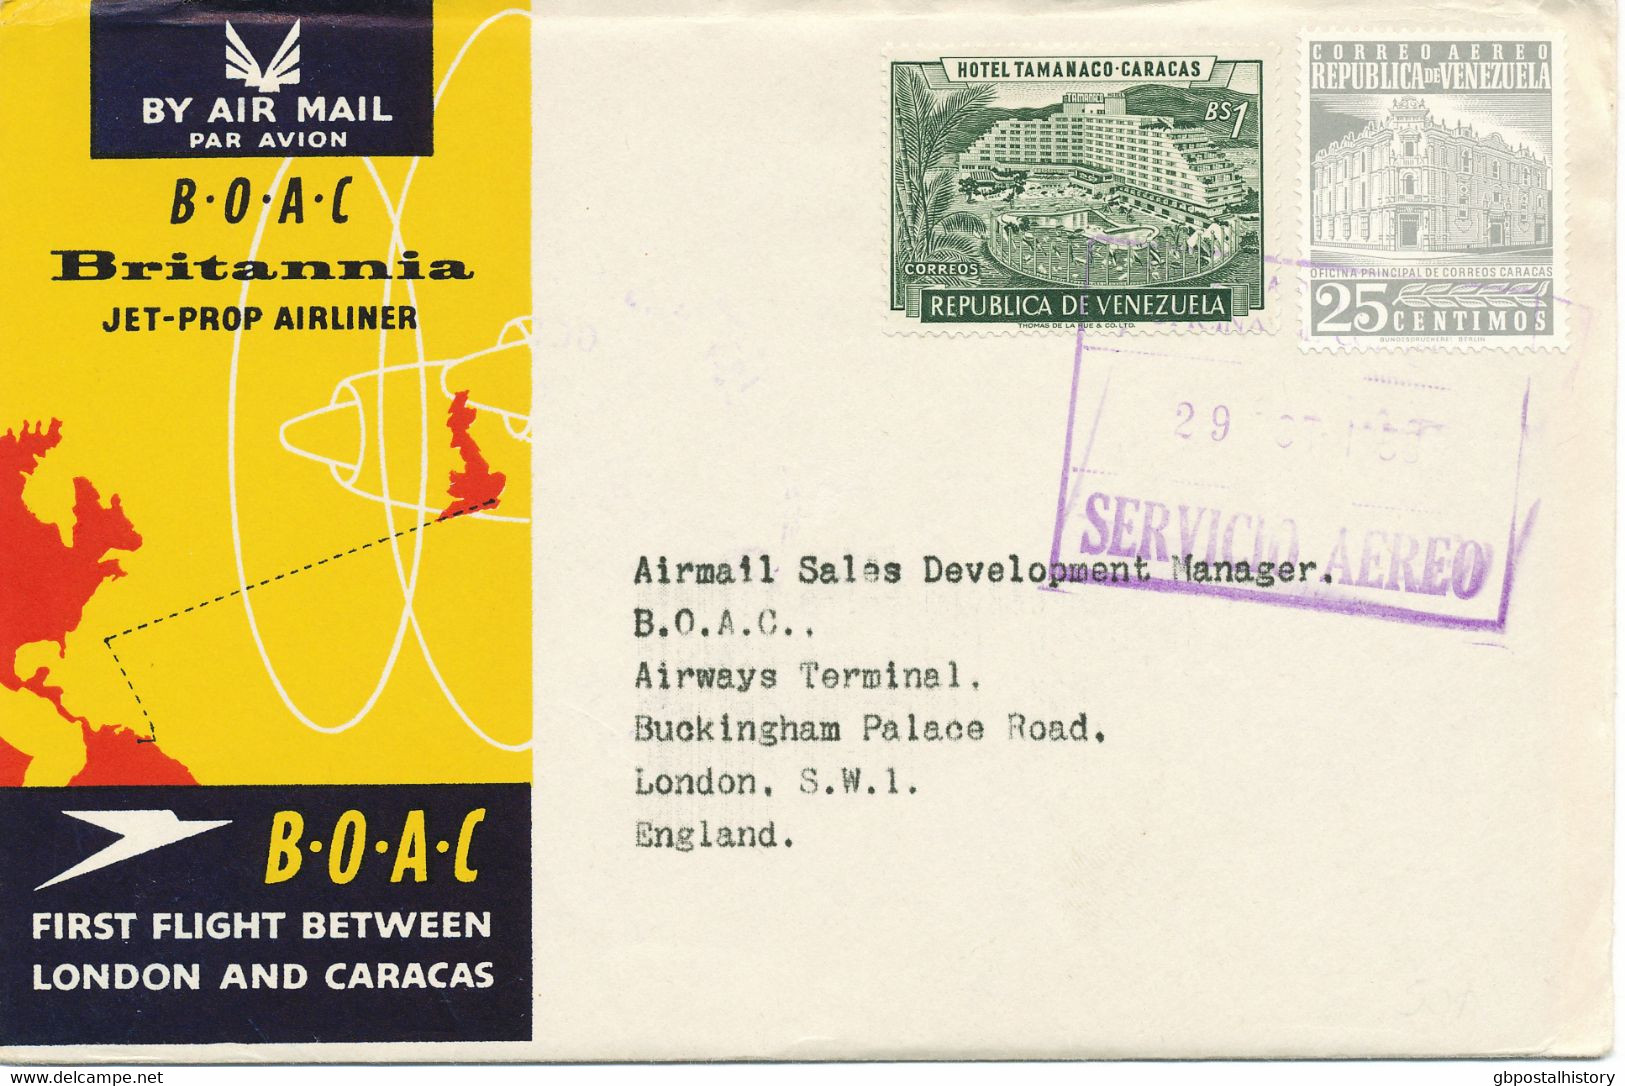 VENEZUELA October 29, 1958, Superb Rare First Flight Cover Of The BOAC - Britannia Jet-Prop-Airliner "CARACAS - LONDON" - Venezuela